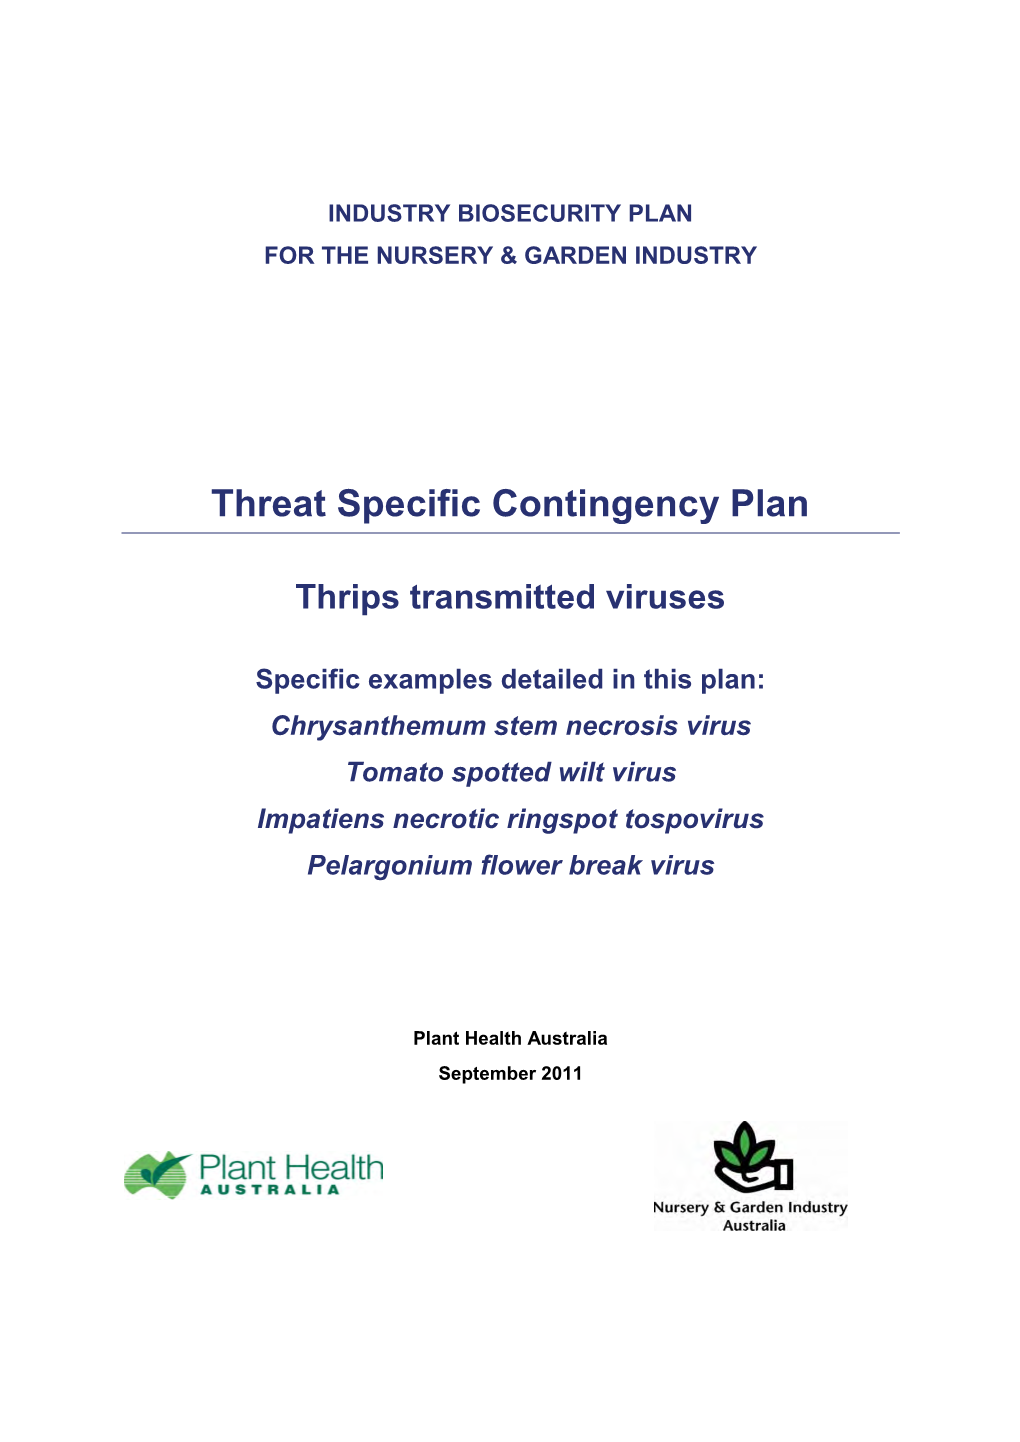 Thrips Transmitted Viruses